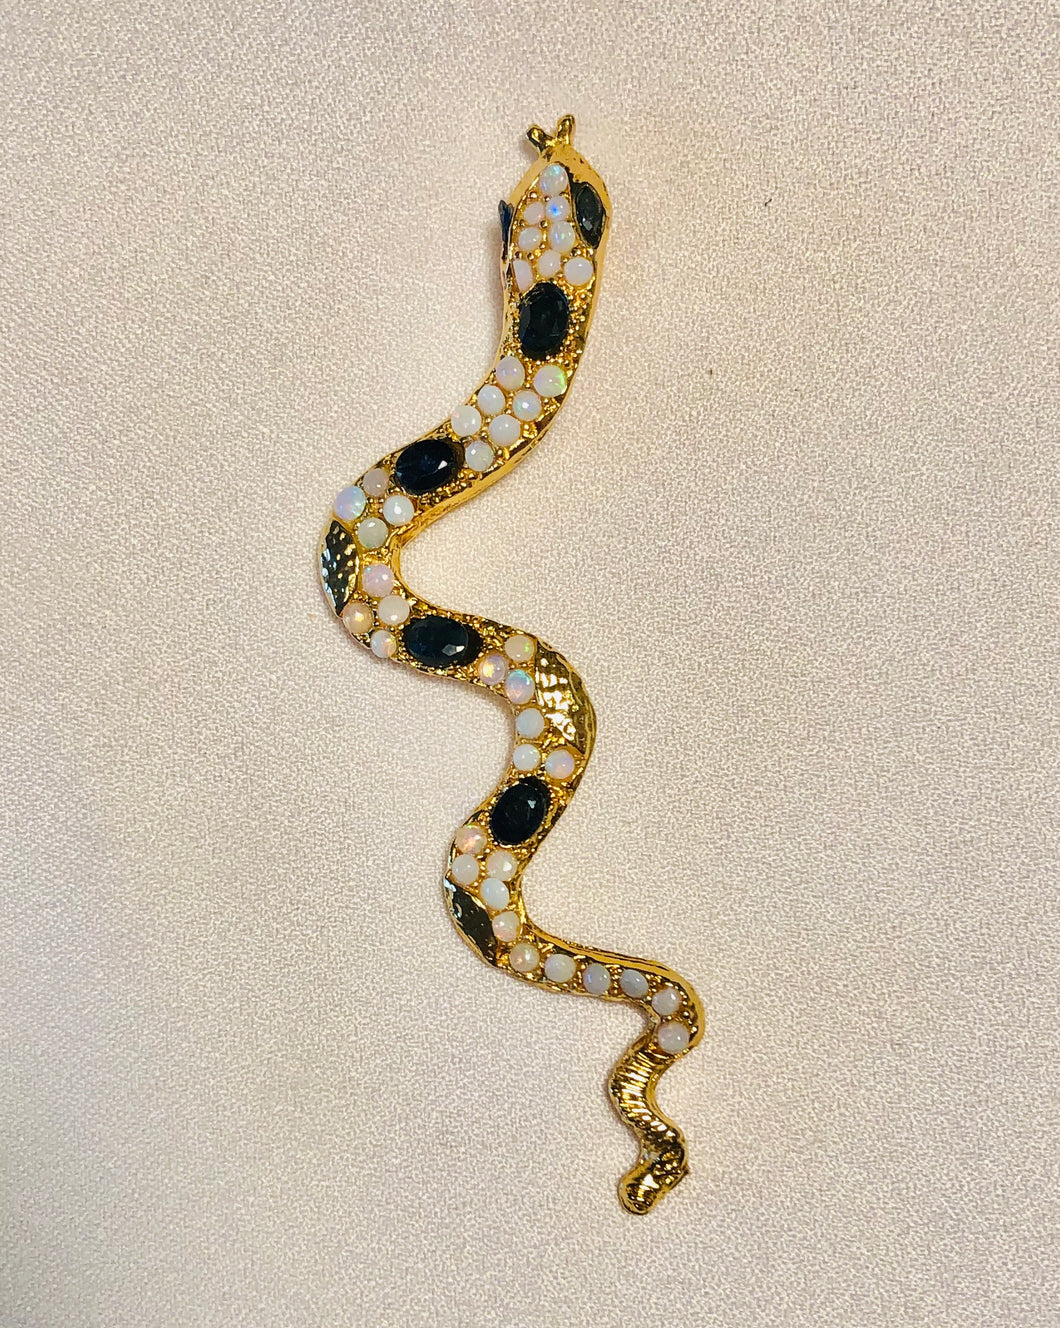 Genuine Sapphire and Opal Snake Brooch